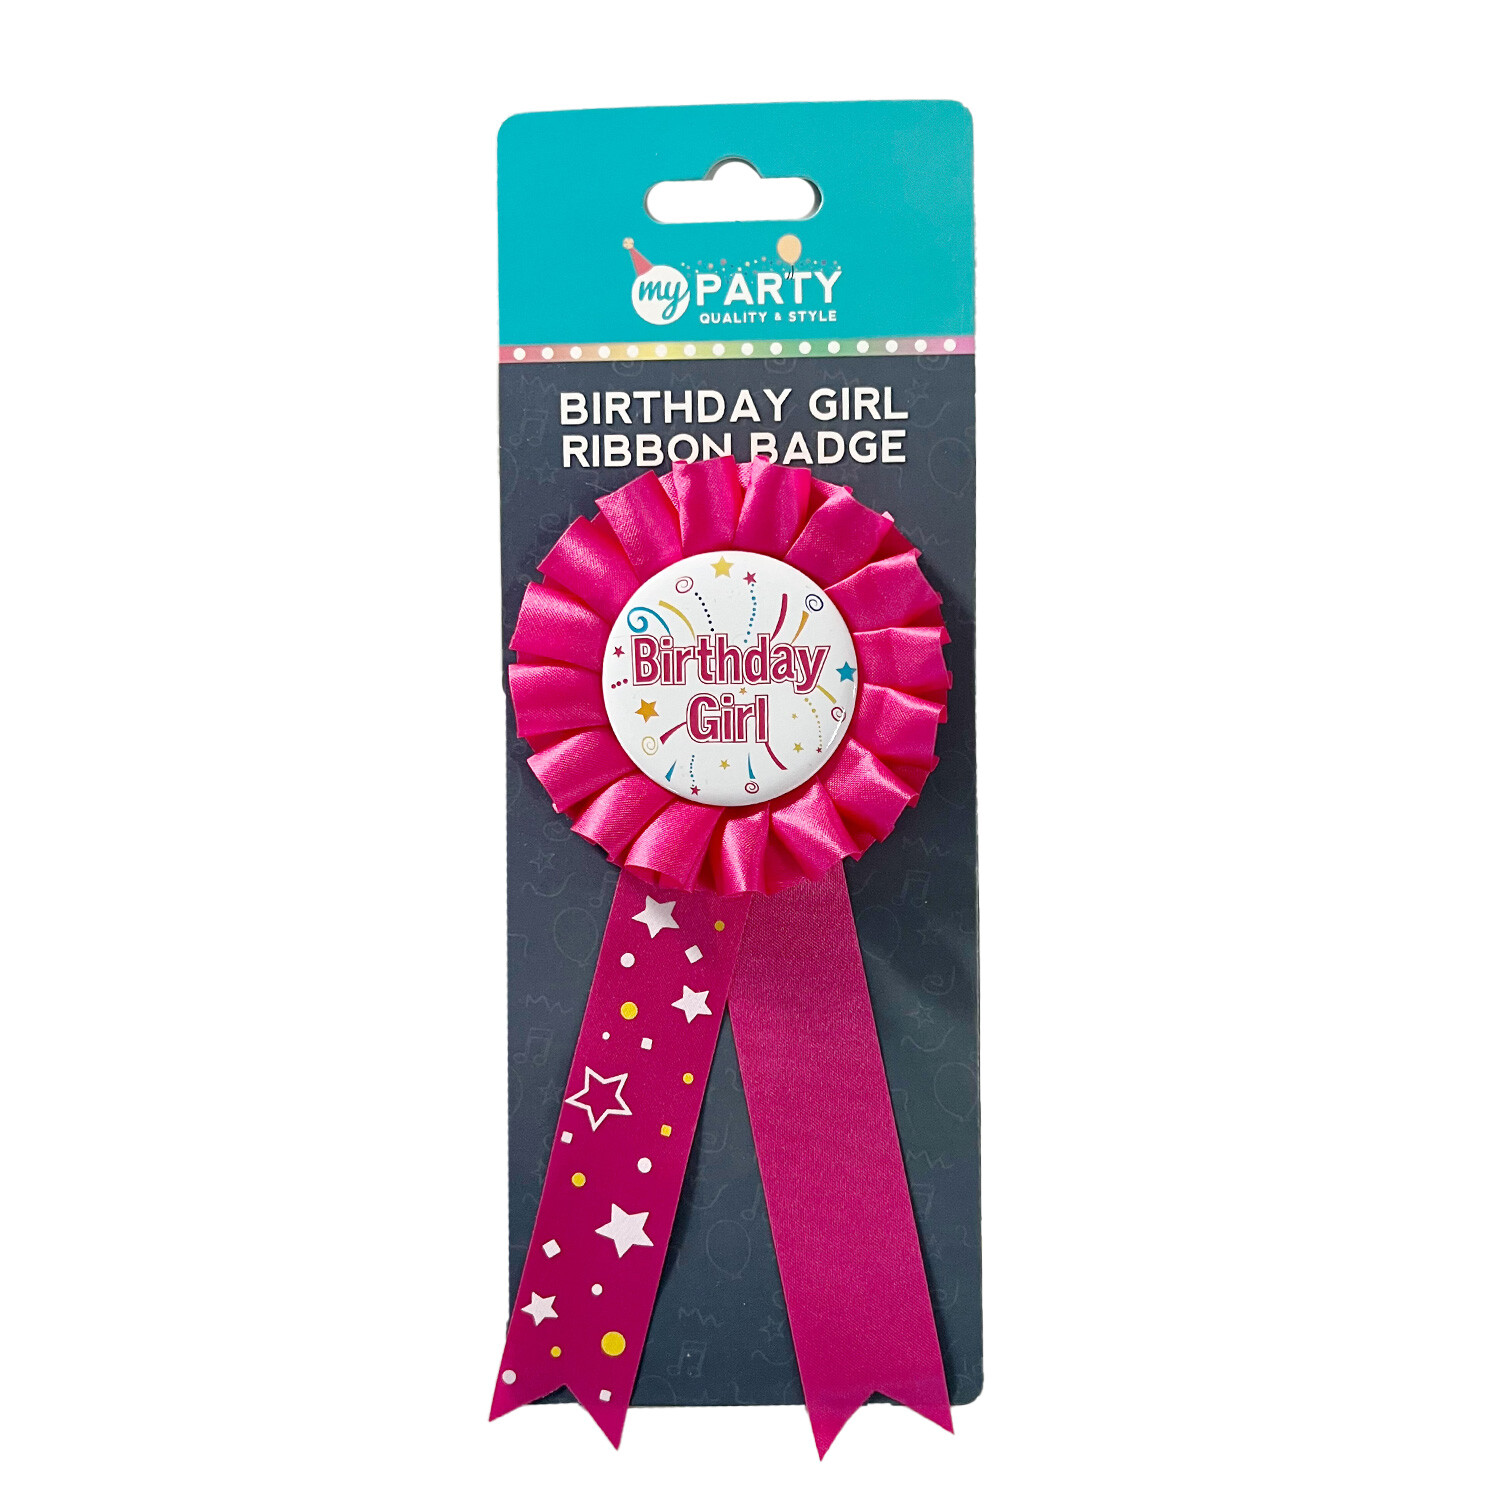 Birthday Girl Ribbon Badge - Pink Image